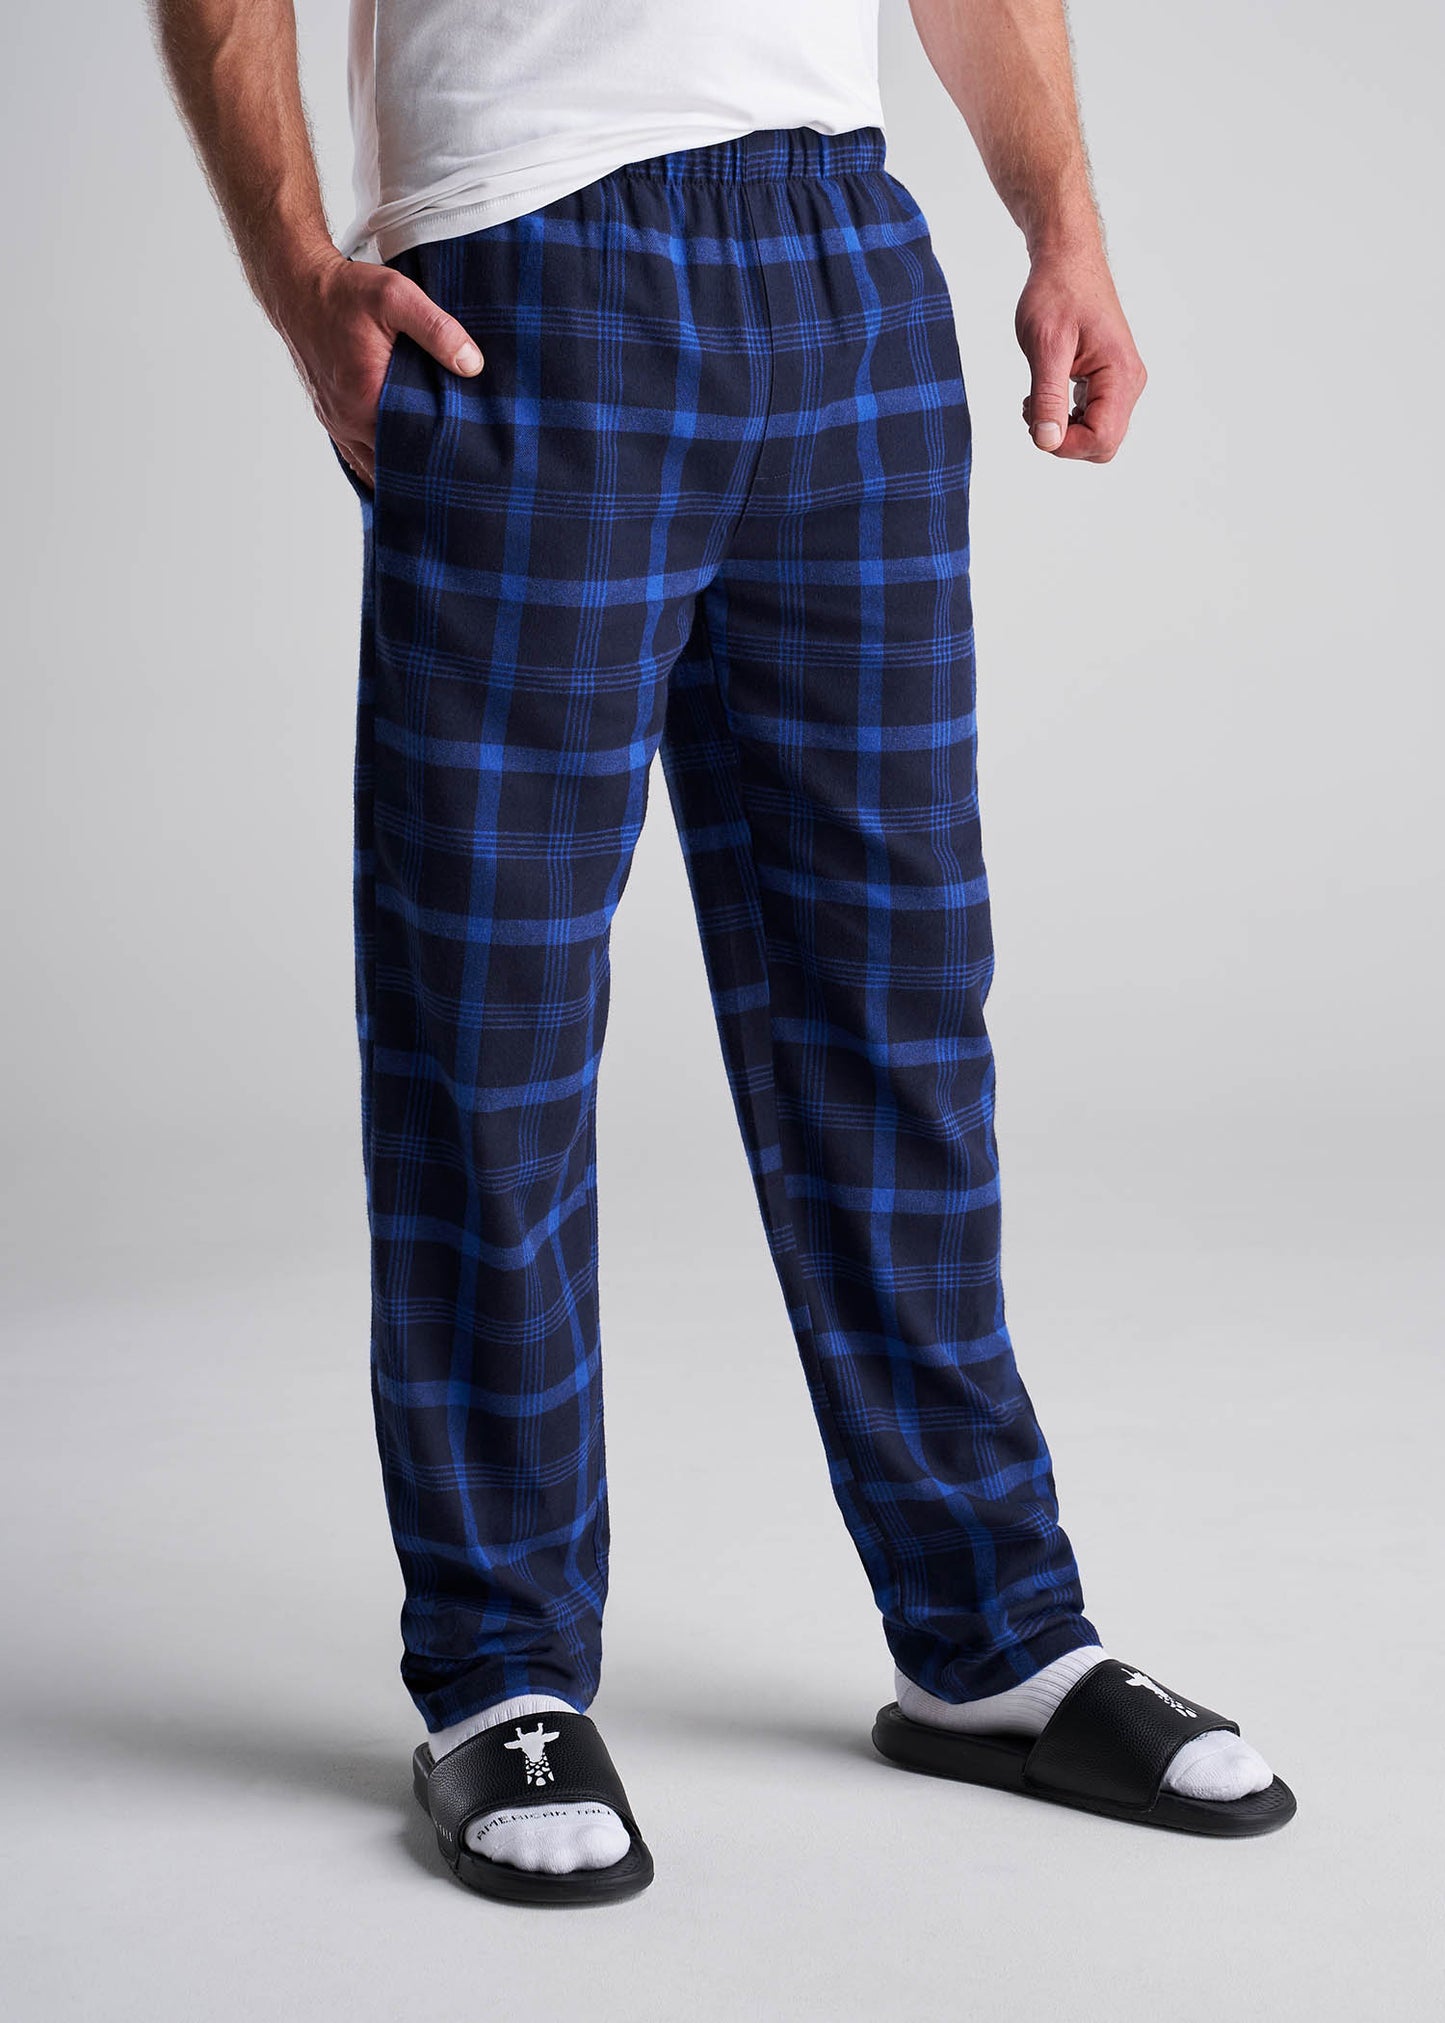 aankleden Misleidend het winkelcentrum Plaid Pajama Pants for Tall Men | American Tall